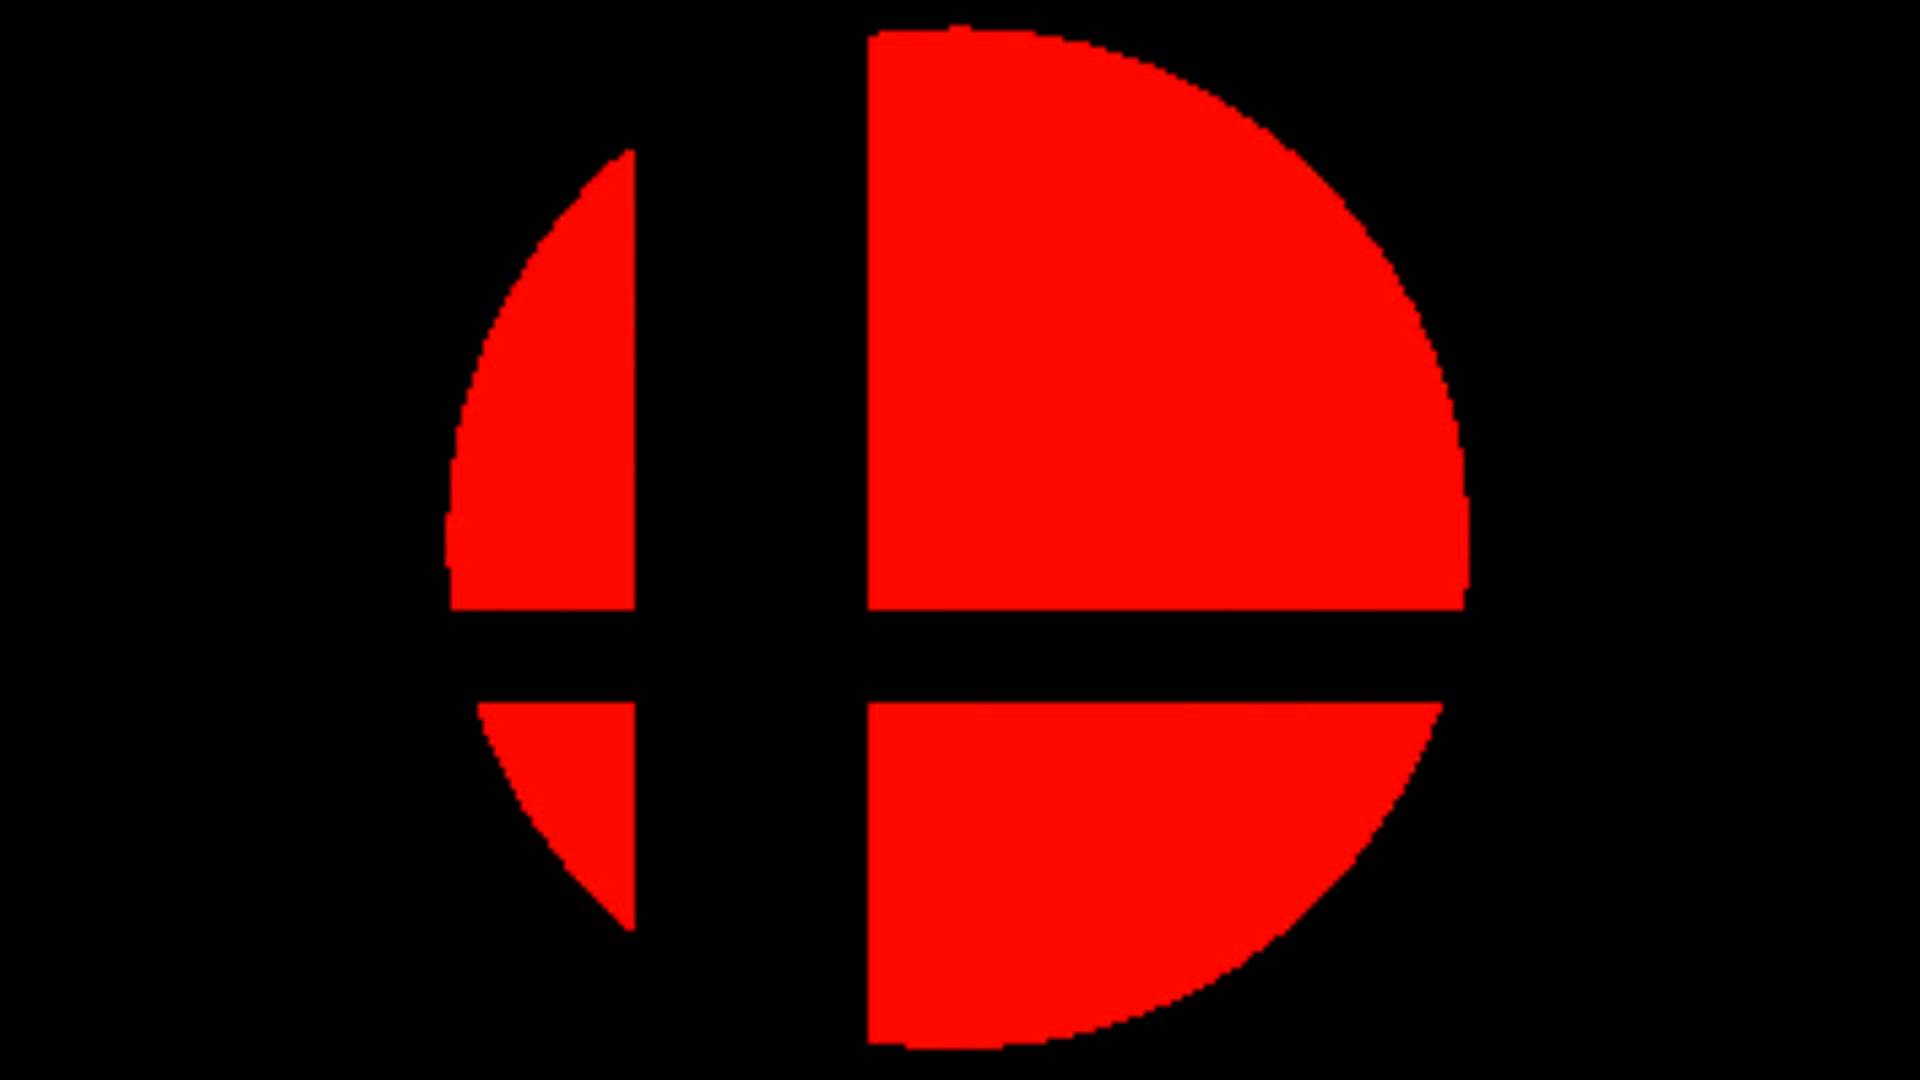 Super Smash Bros Logo Wallpapers